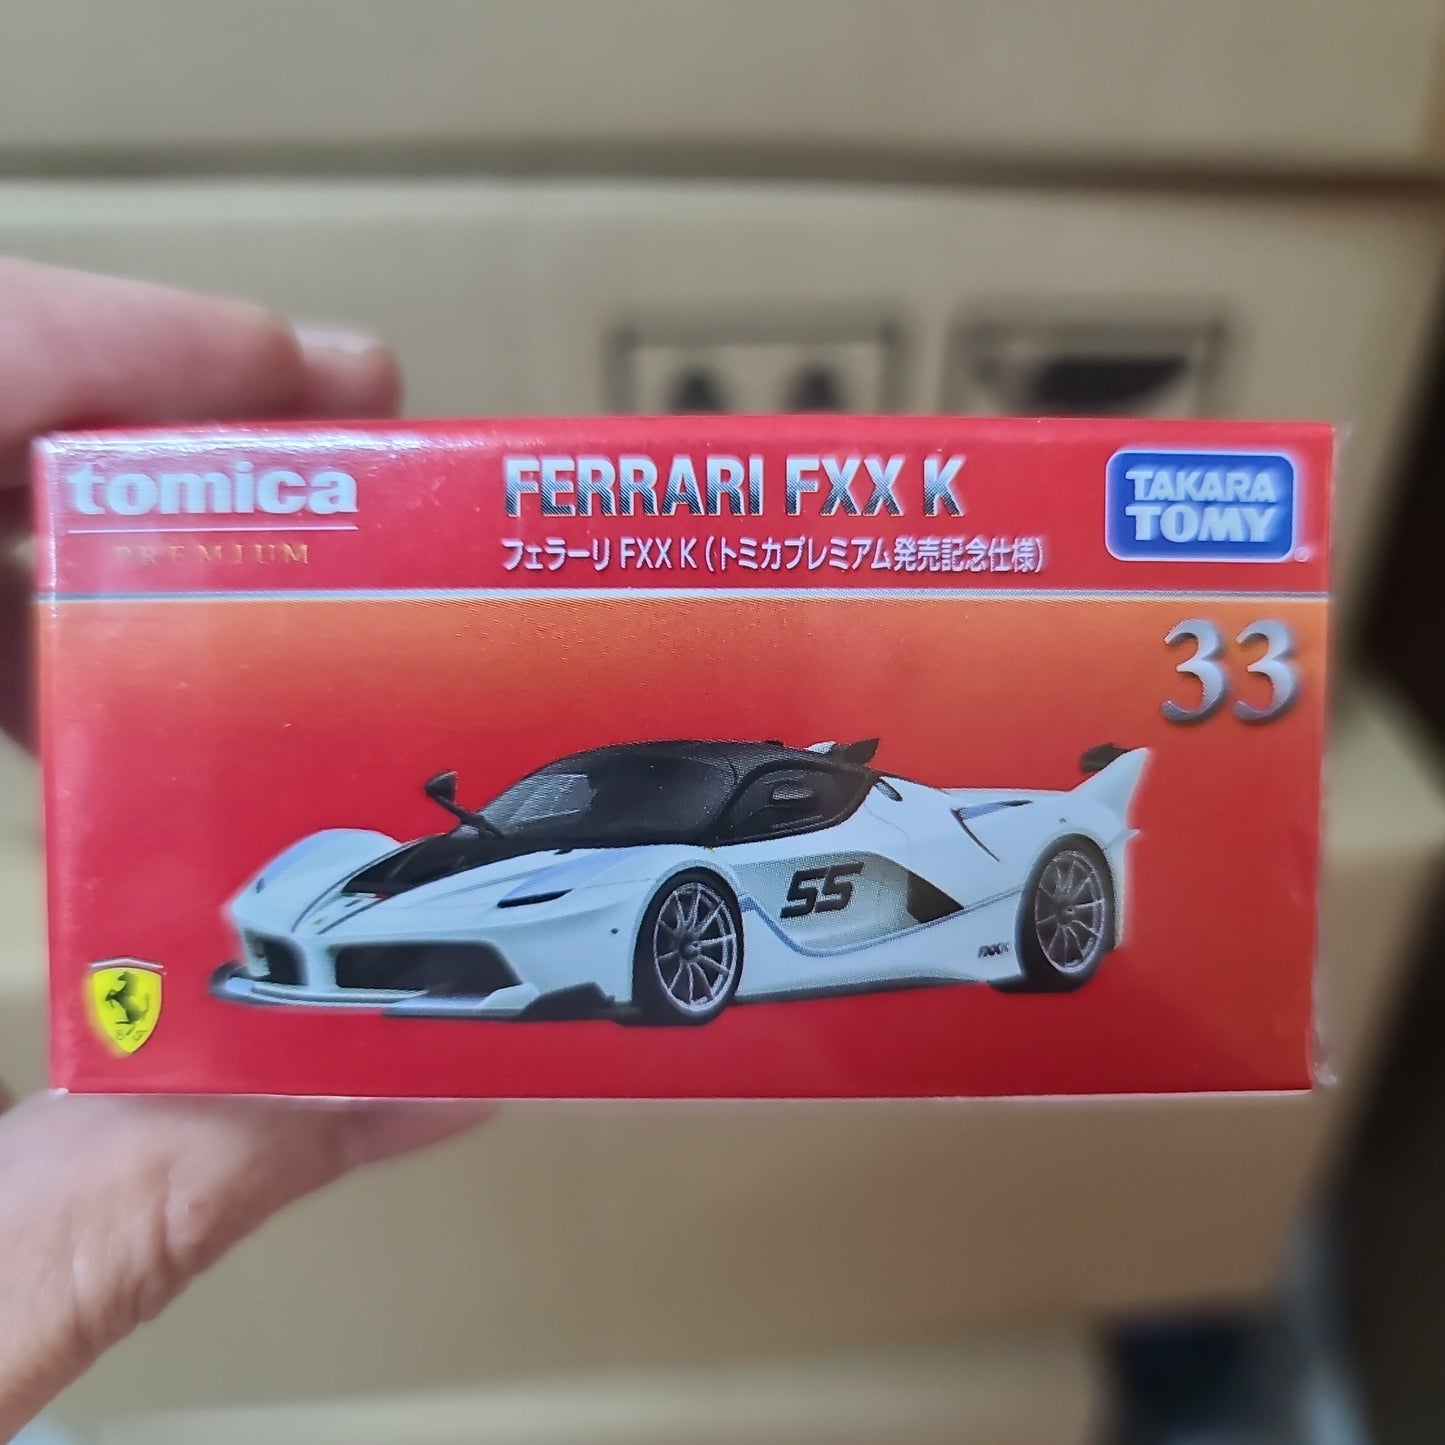 Tomica Premium #33 Ferrari FXX K set of two